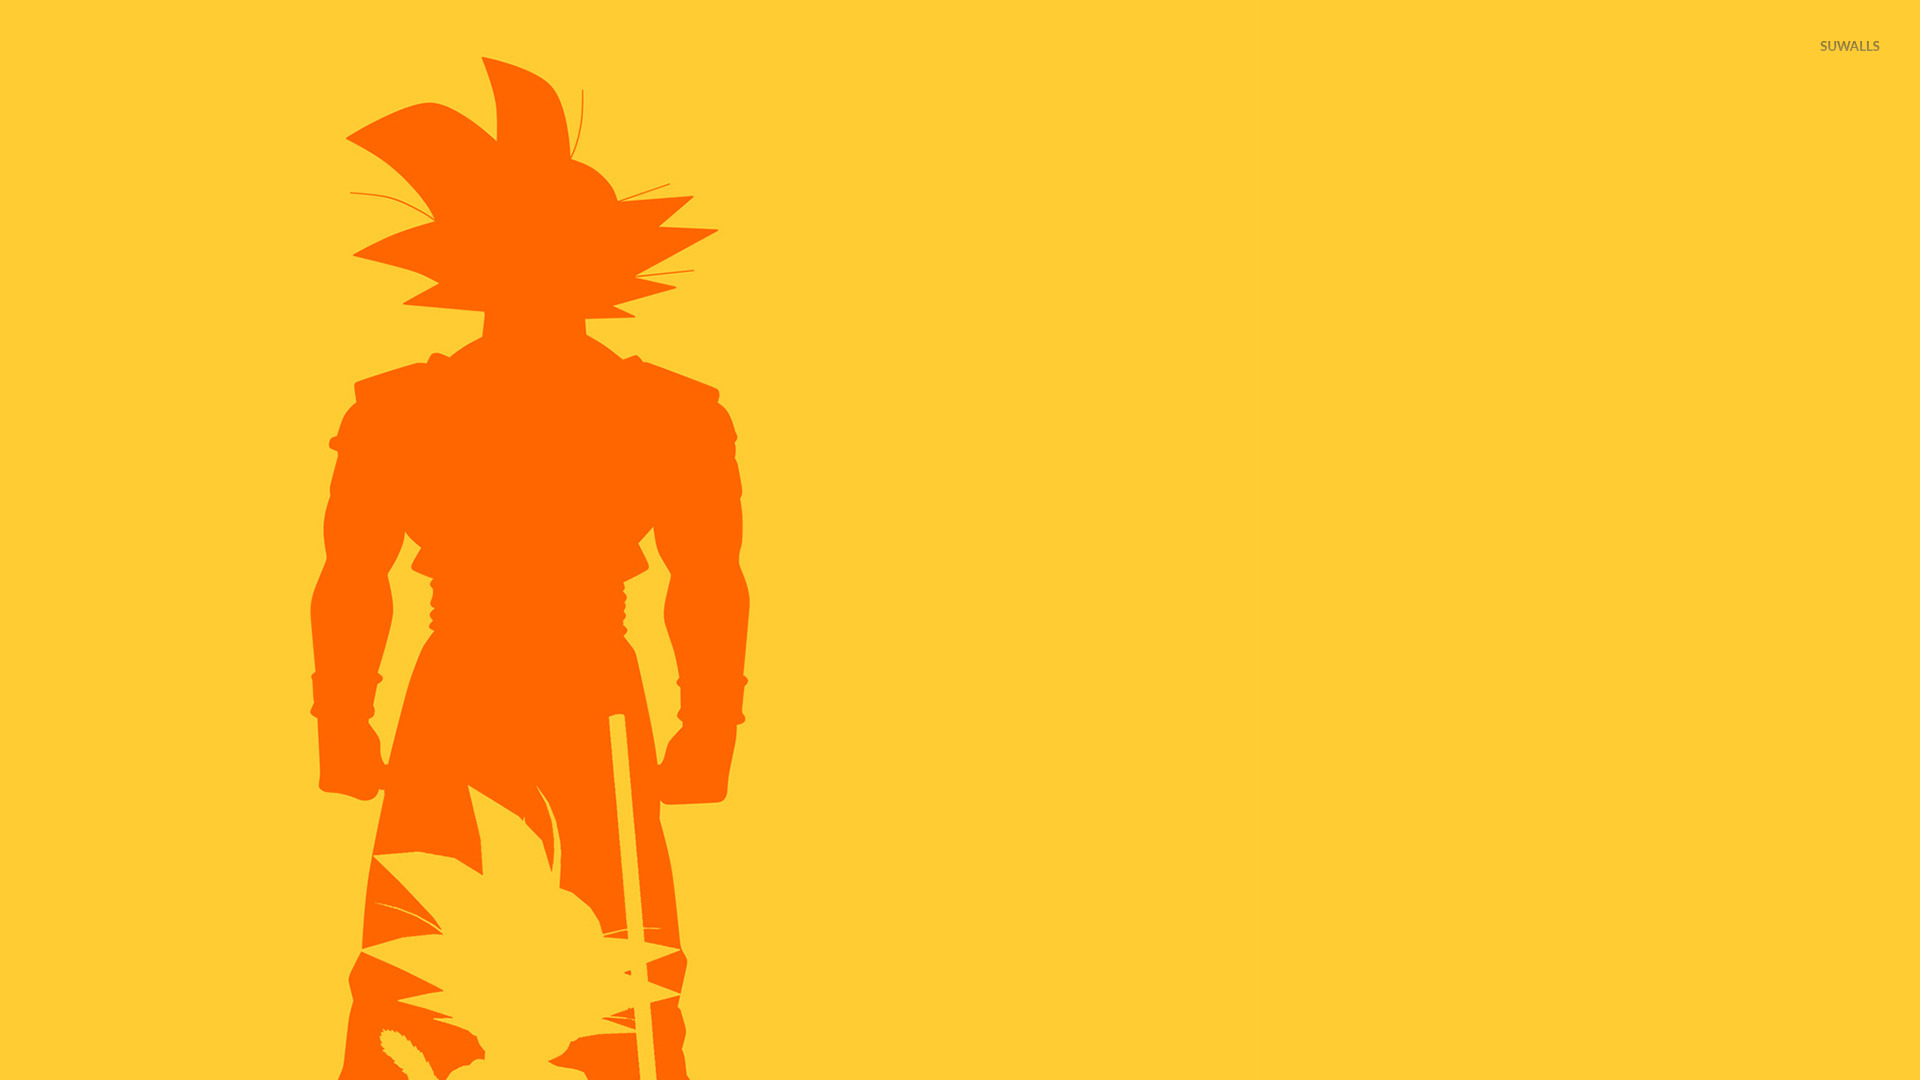 goku wallpaper,orange,yellow,illustration,graphic design,silhouette